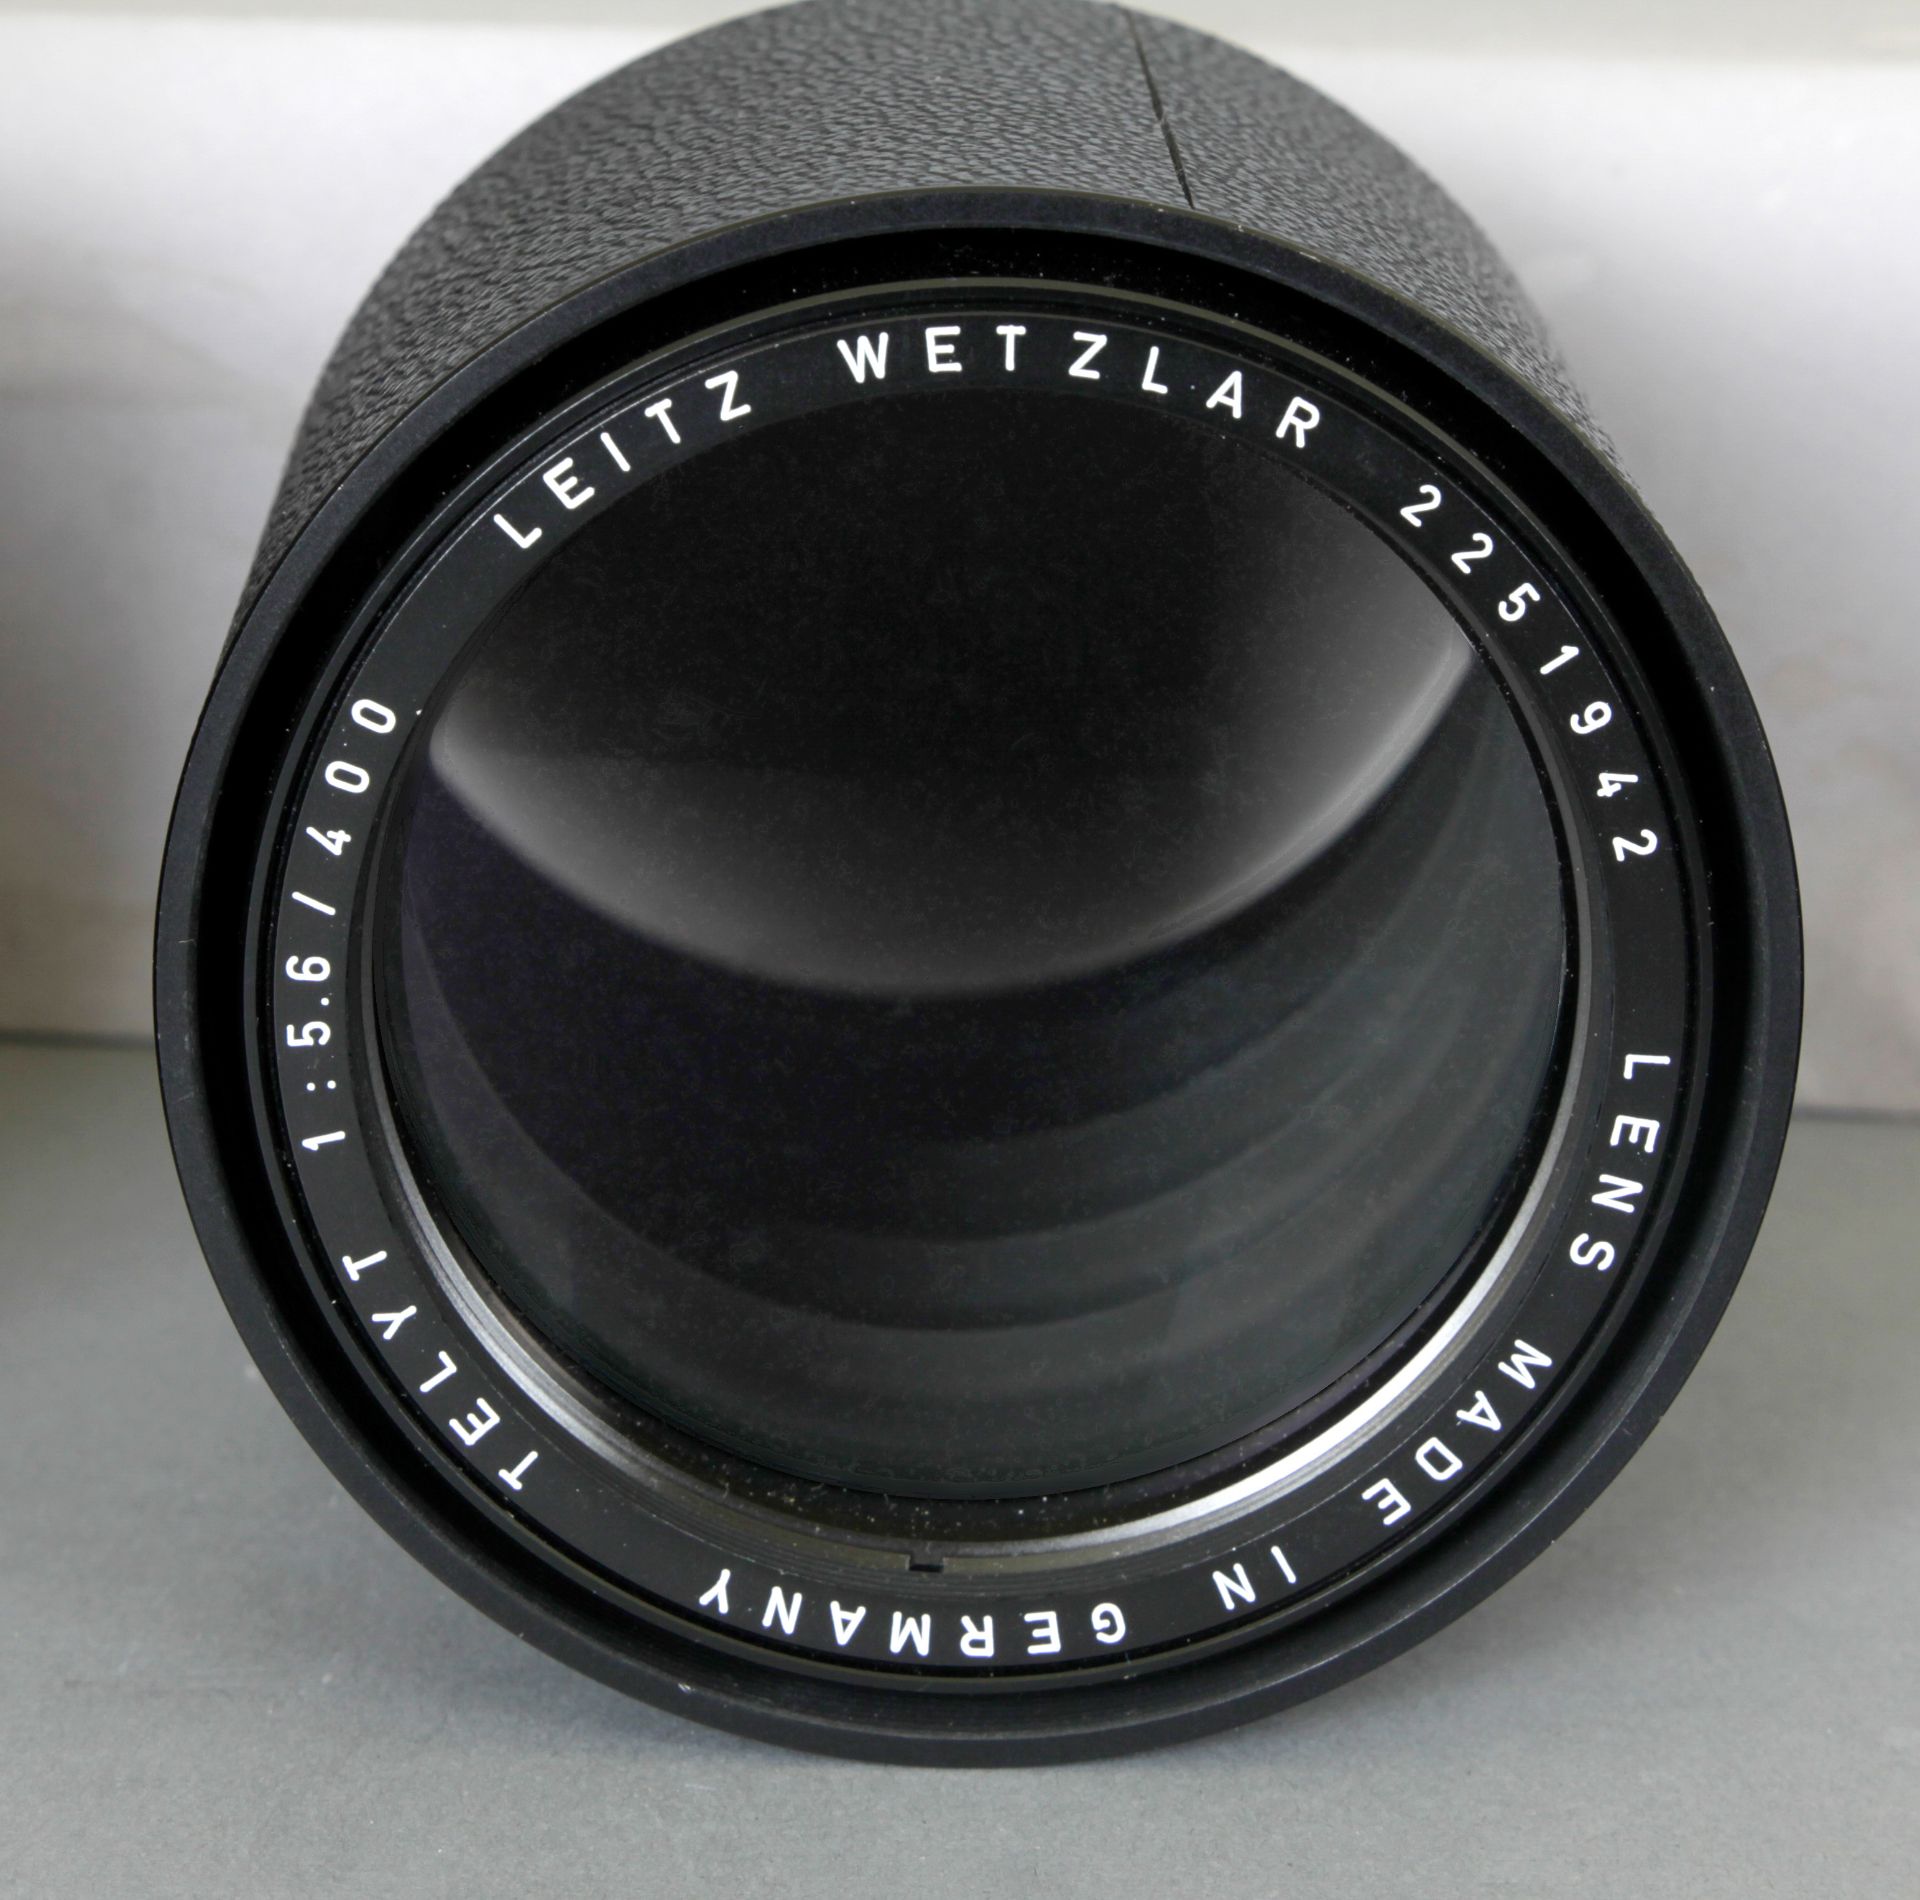 Leica Telyt-R 5,6/560 mm für Leica R - Image 2 of 3